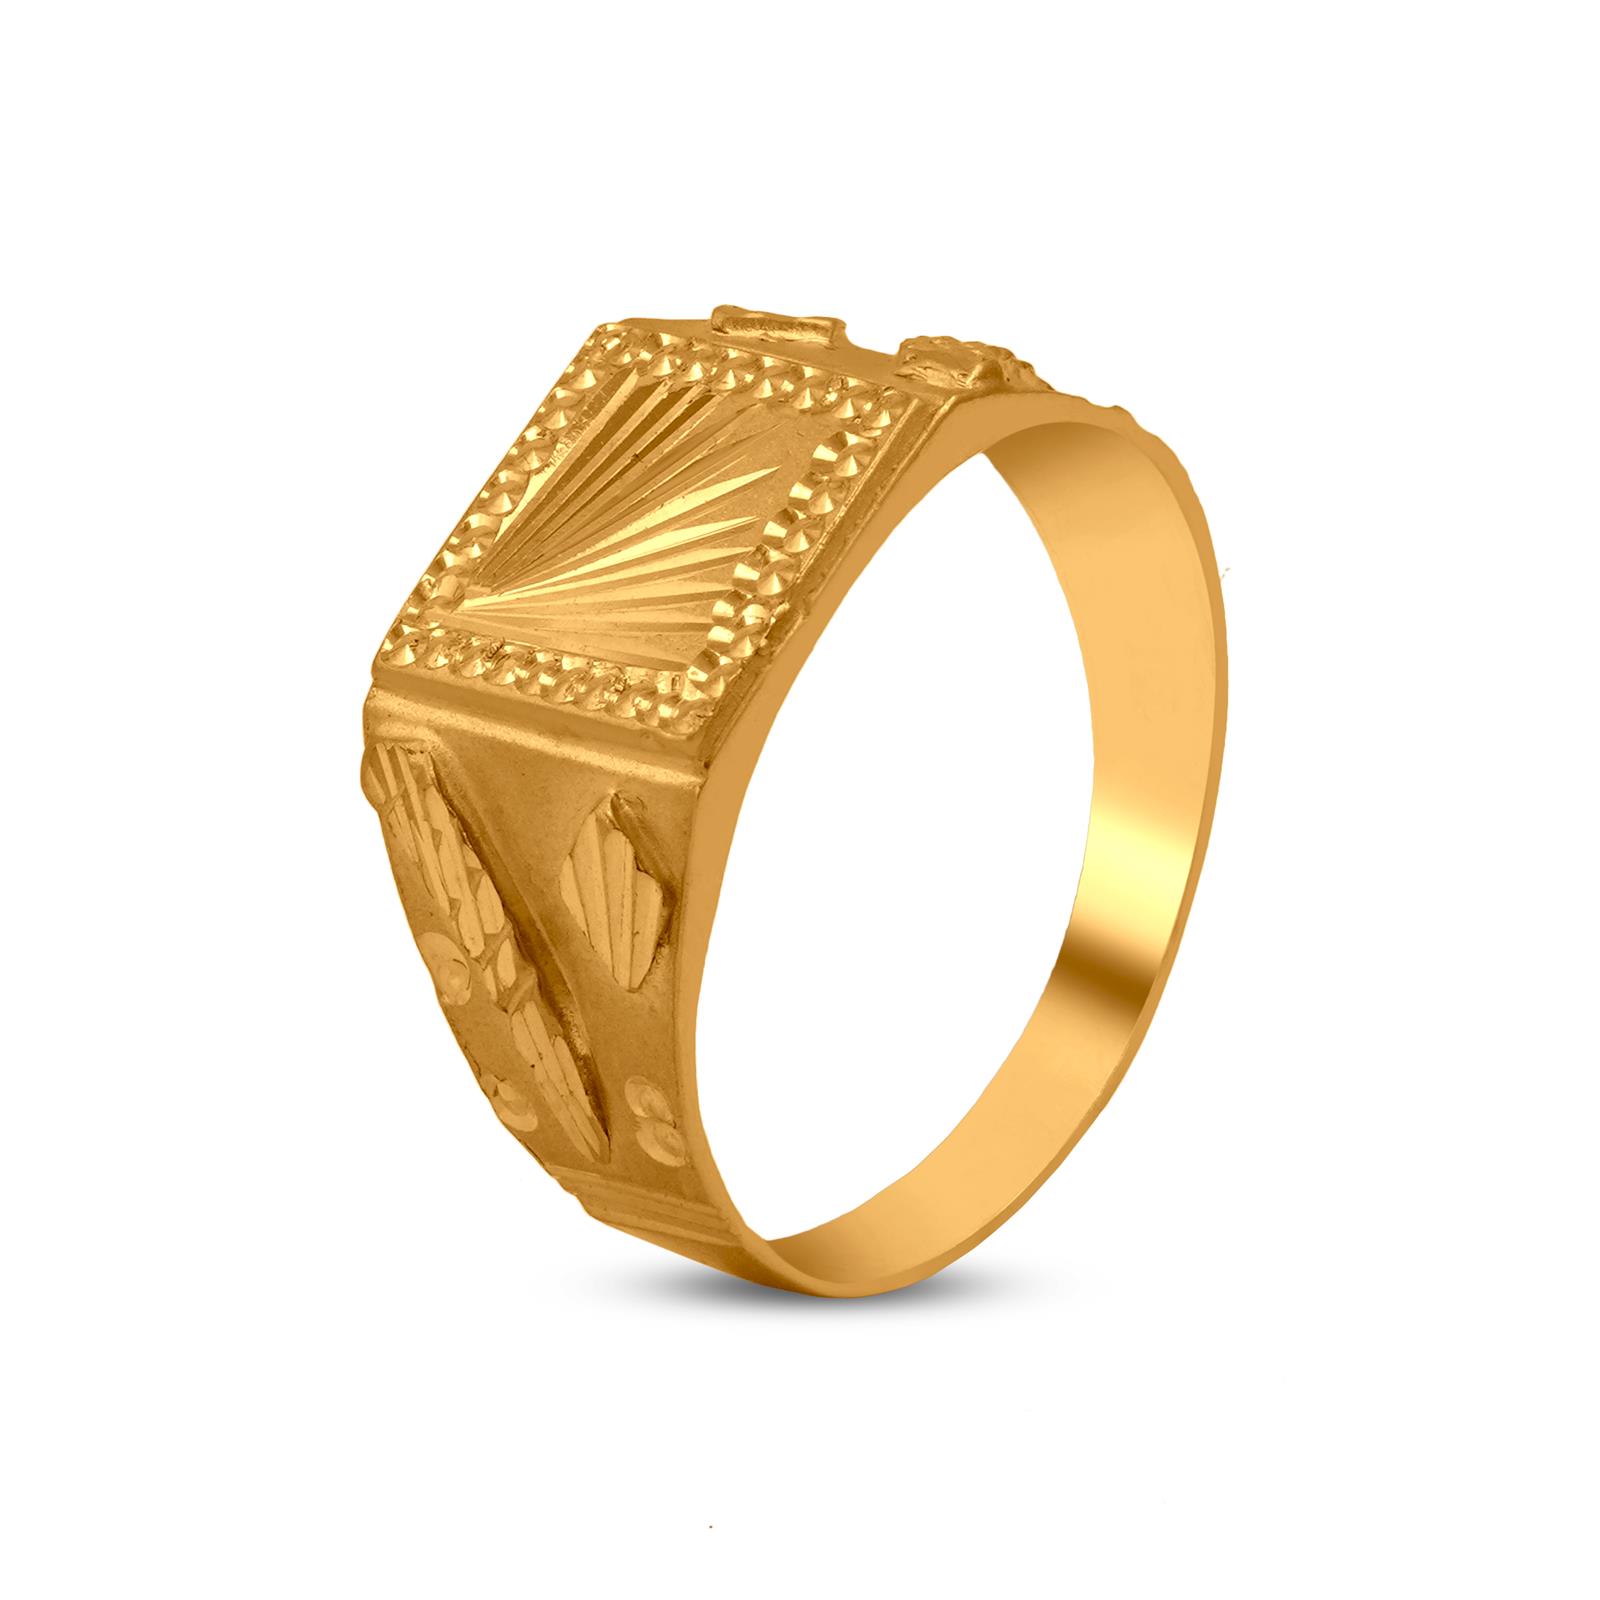 An Embedded Gold Men's Ring